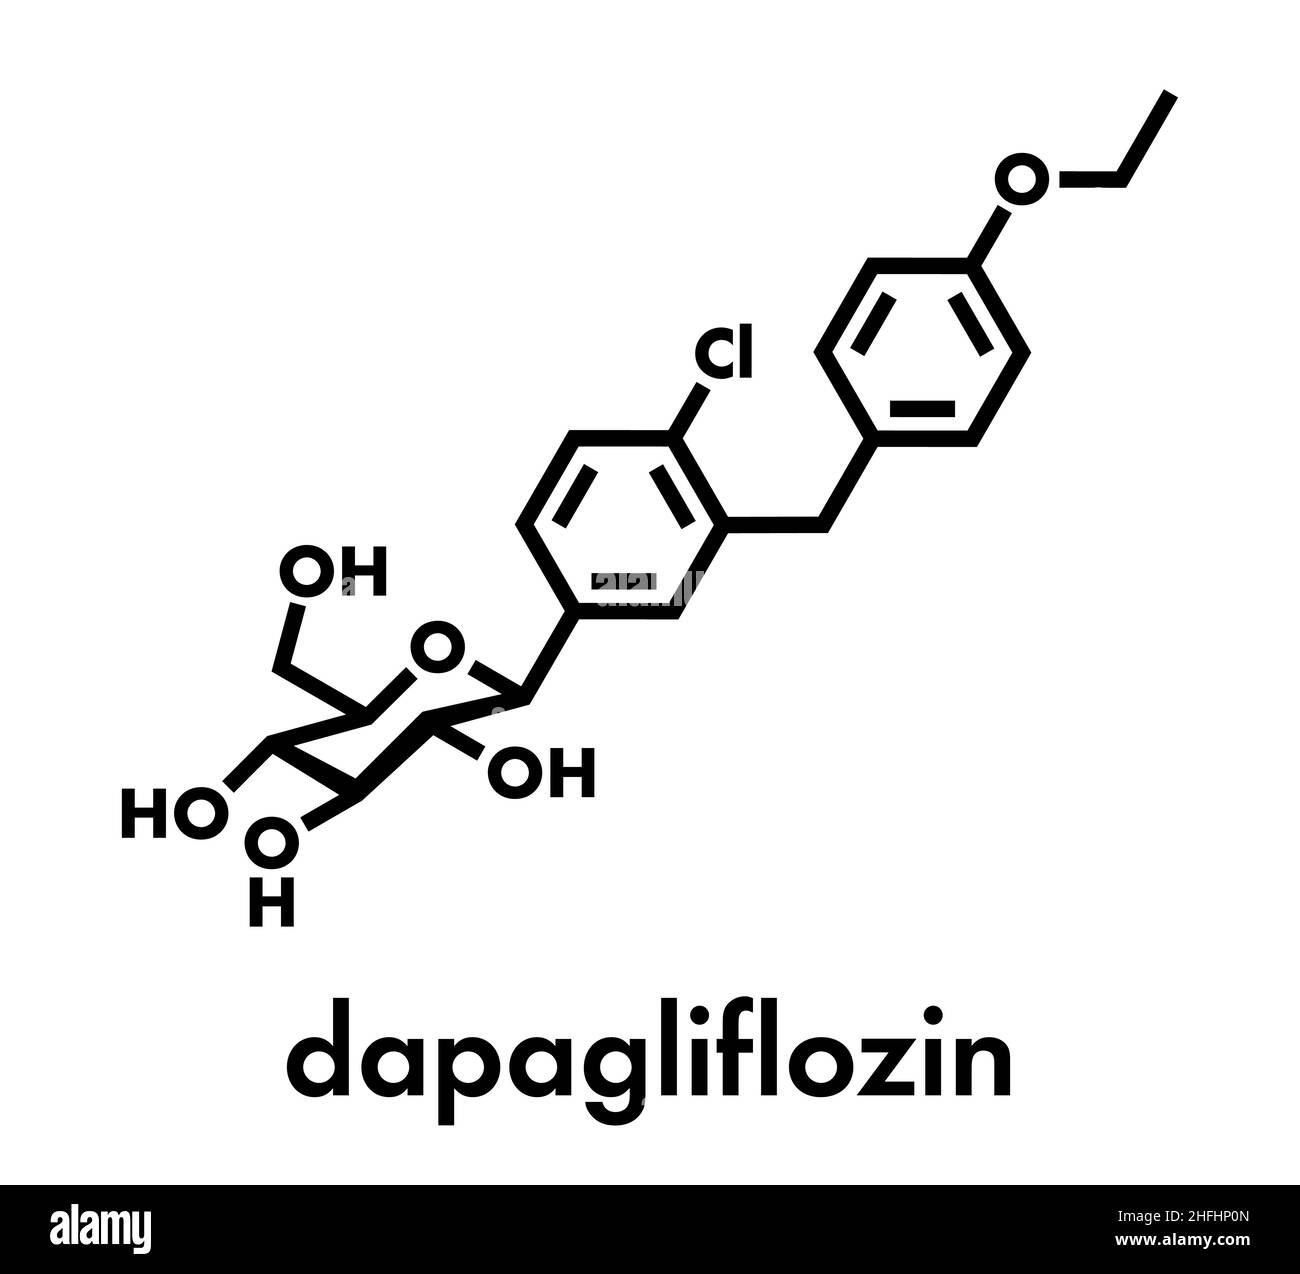 Dapagliflozin diabetes drug molecule. Inhibitor of sodium-glucose transport proteins subtype 2 (SGLT2). Skeletal formula. Stock Vector